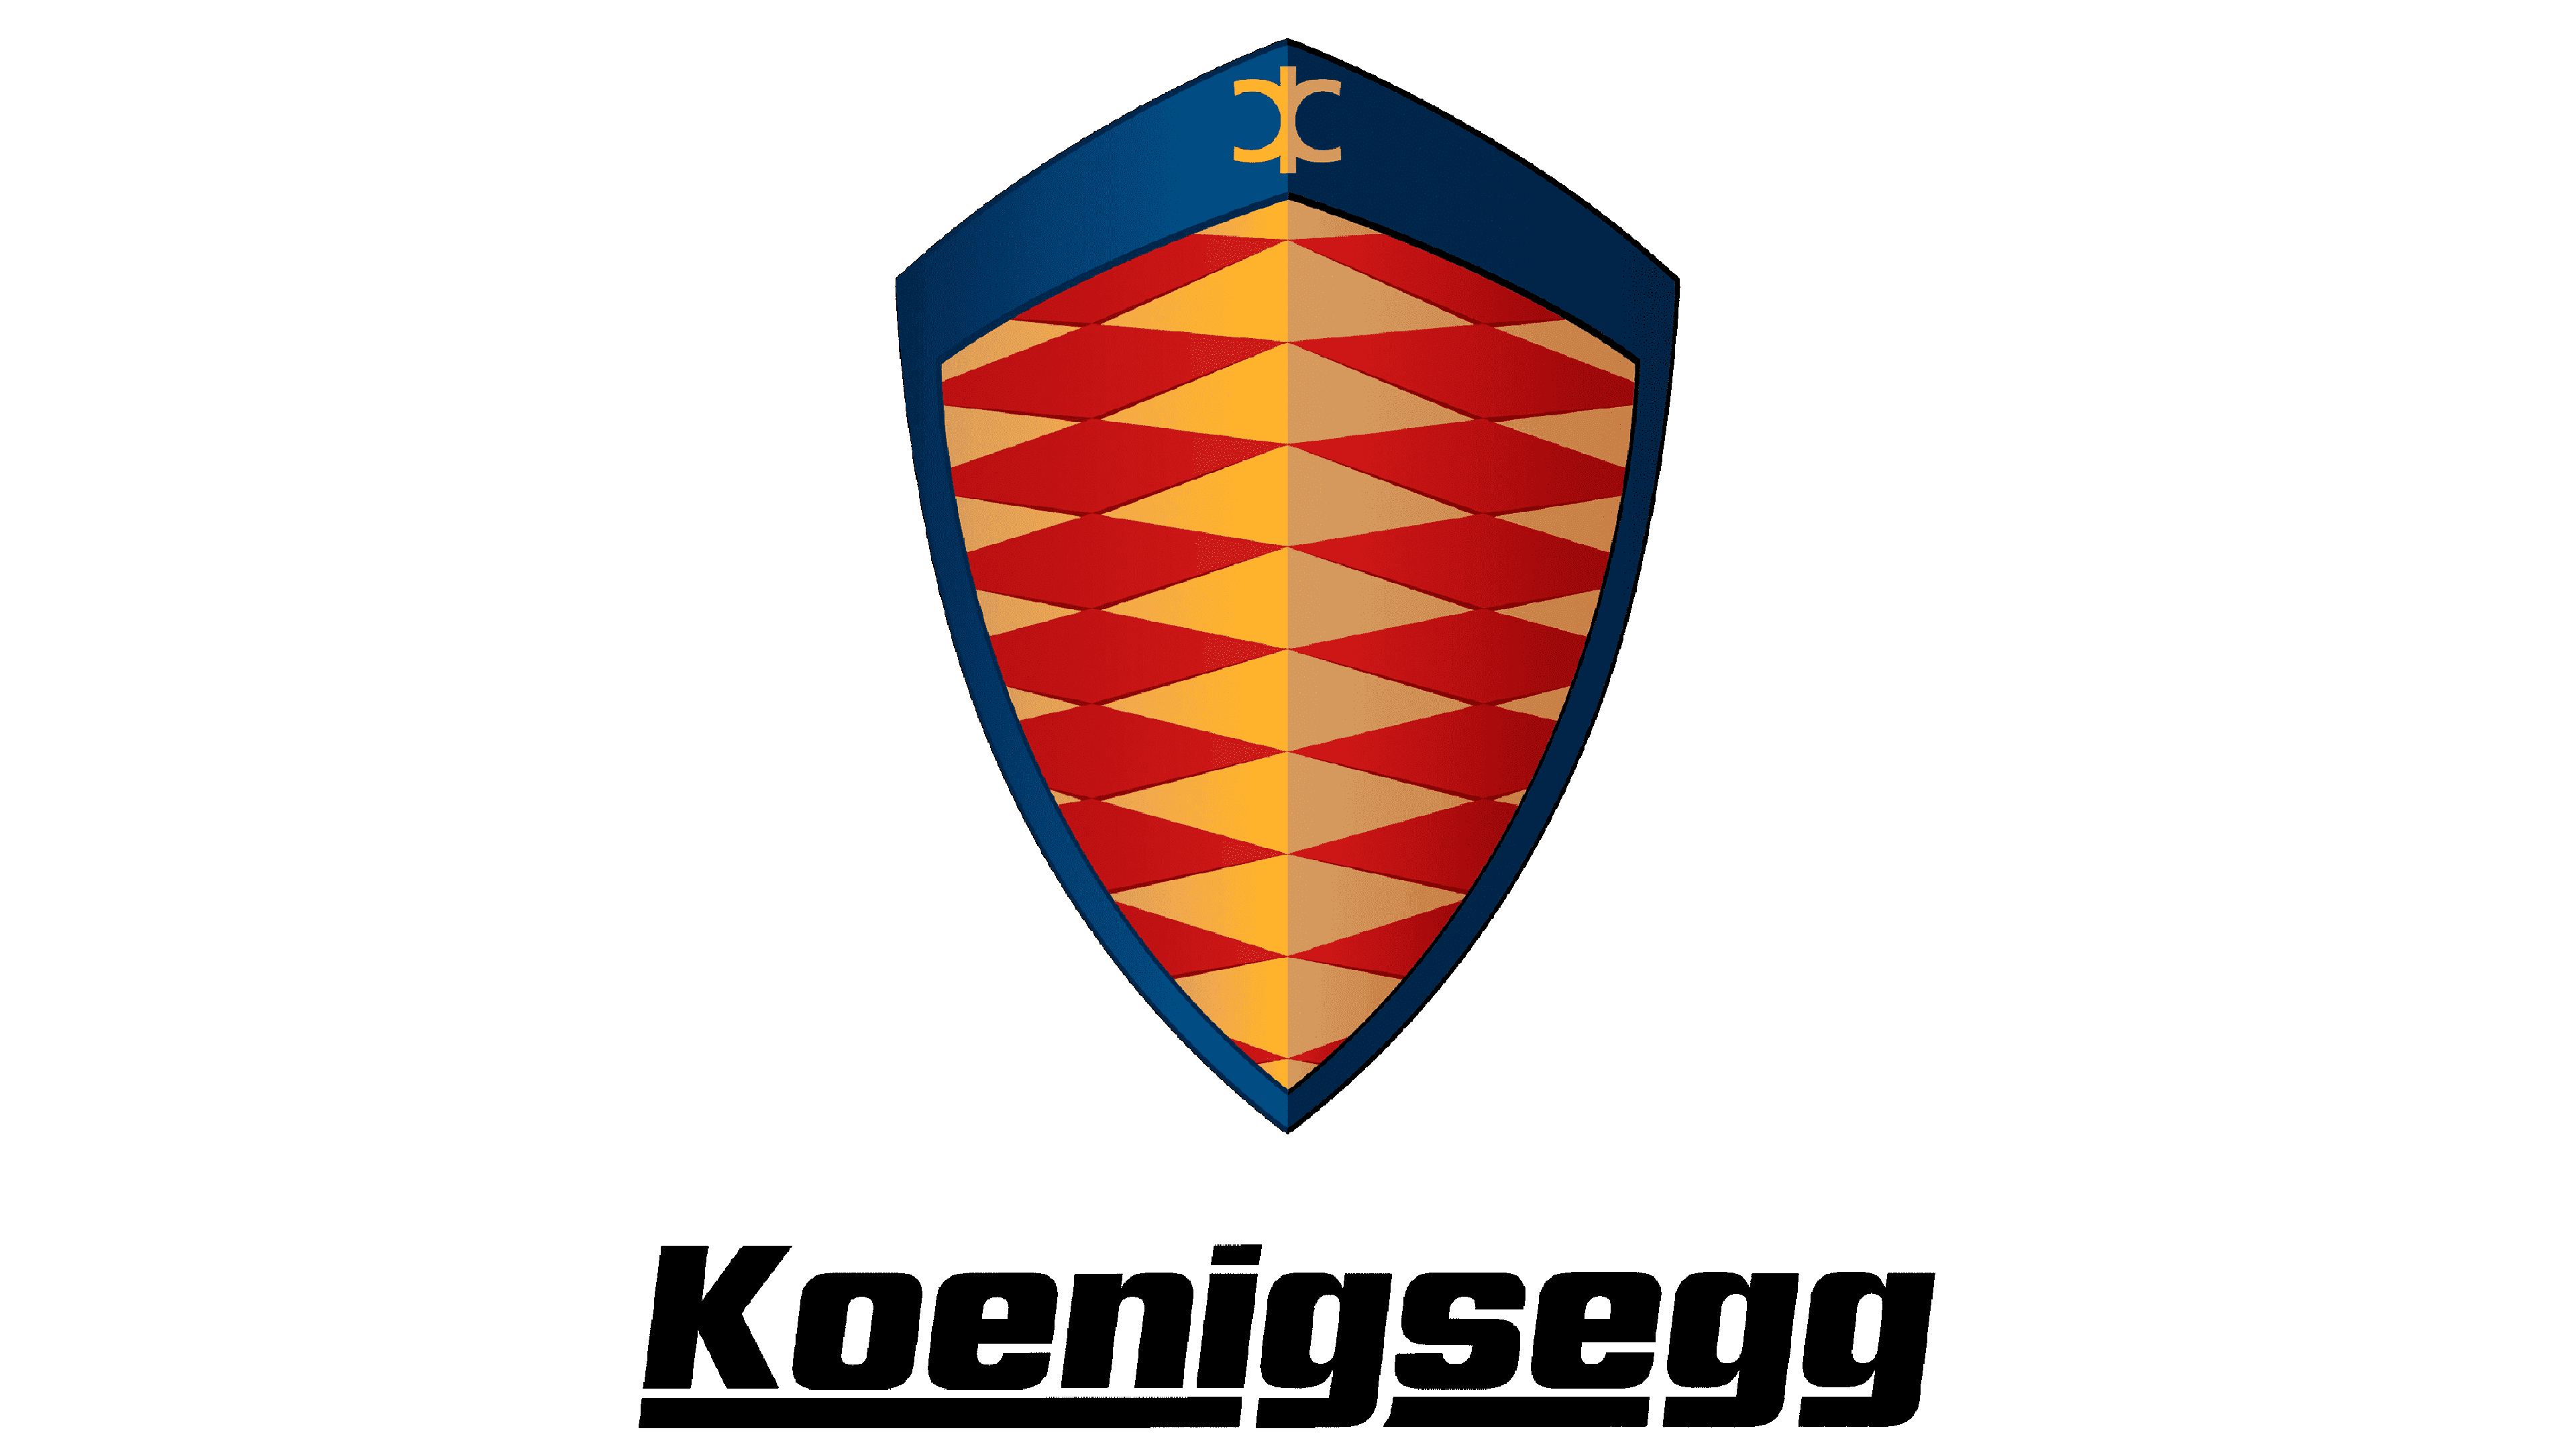 Koenigsegg Logo Meaning and History [Koenigsegg symbol]